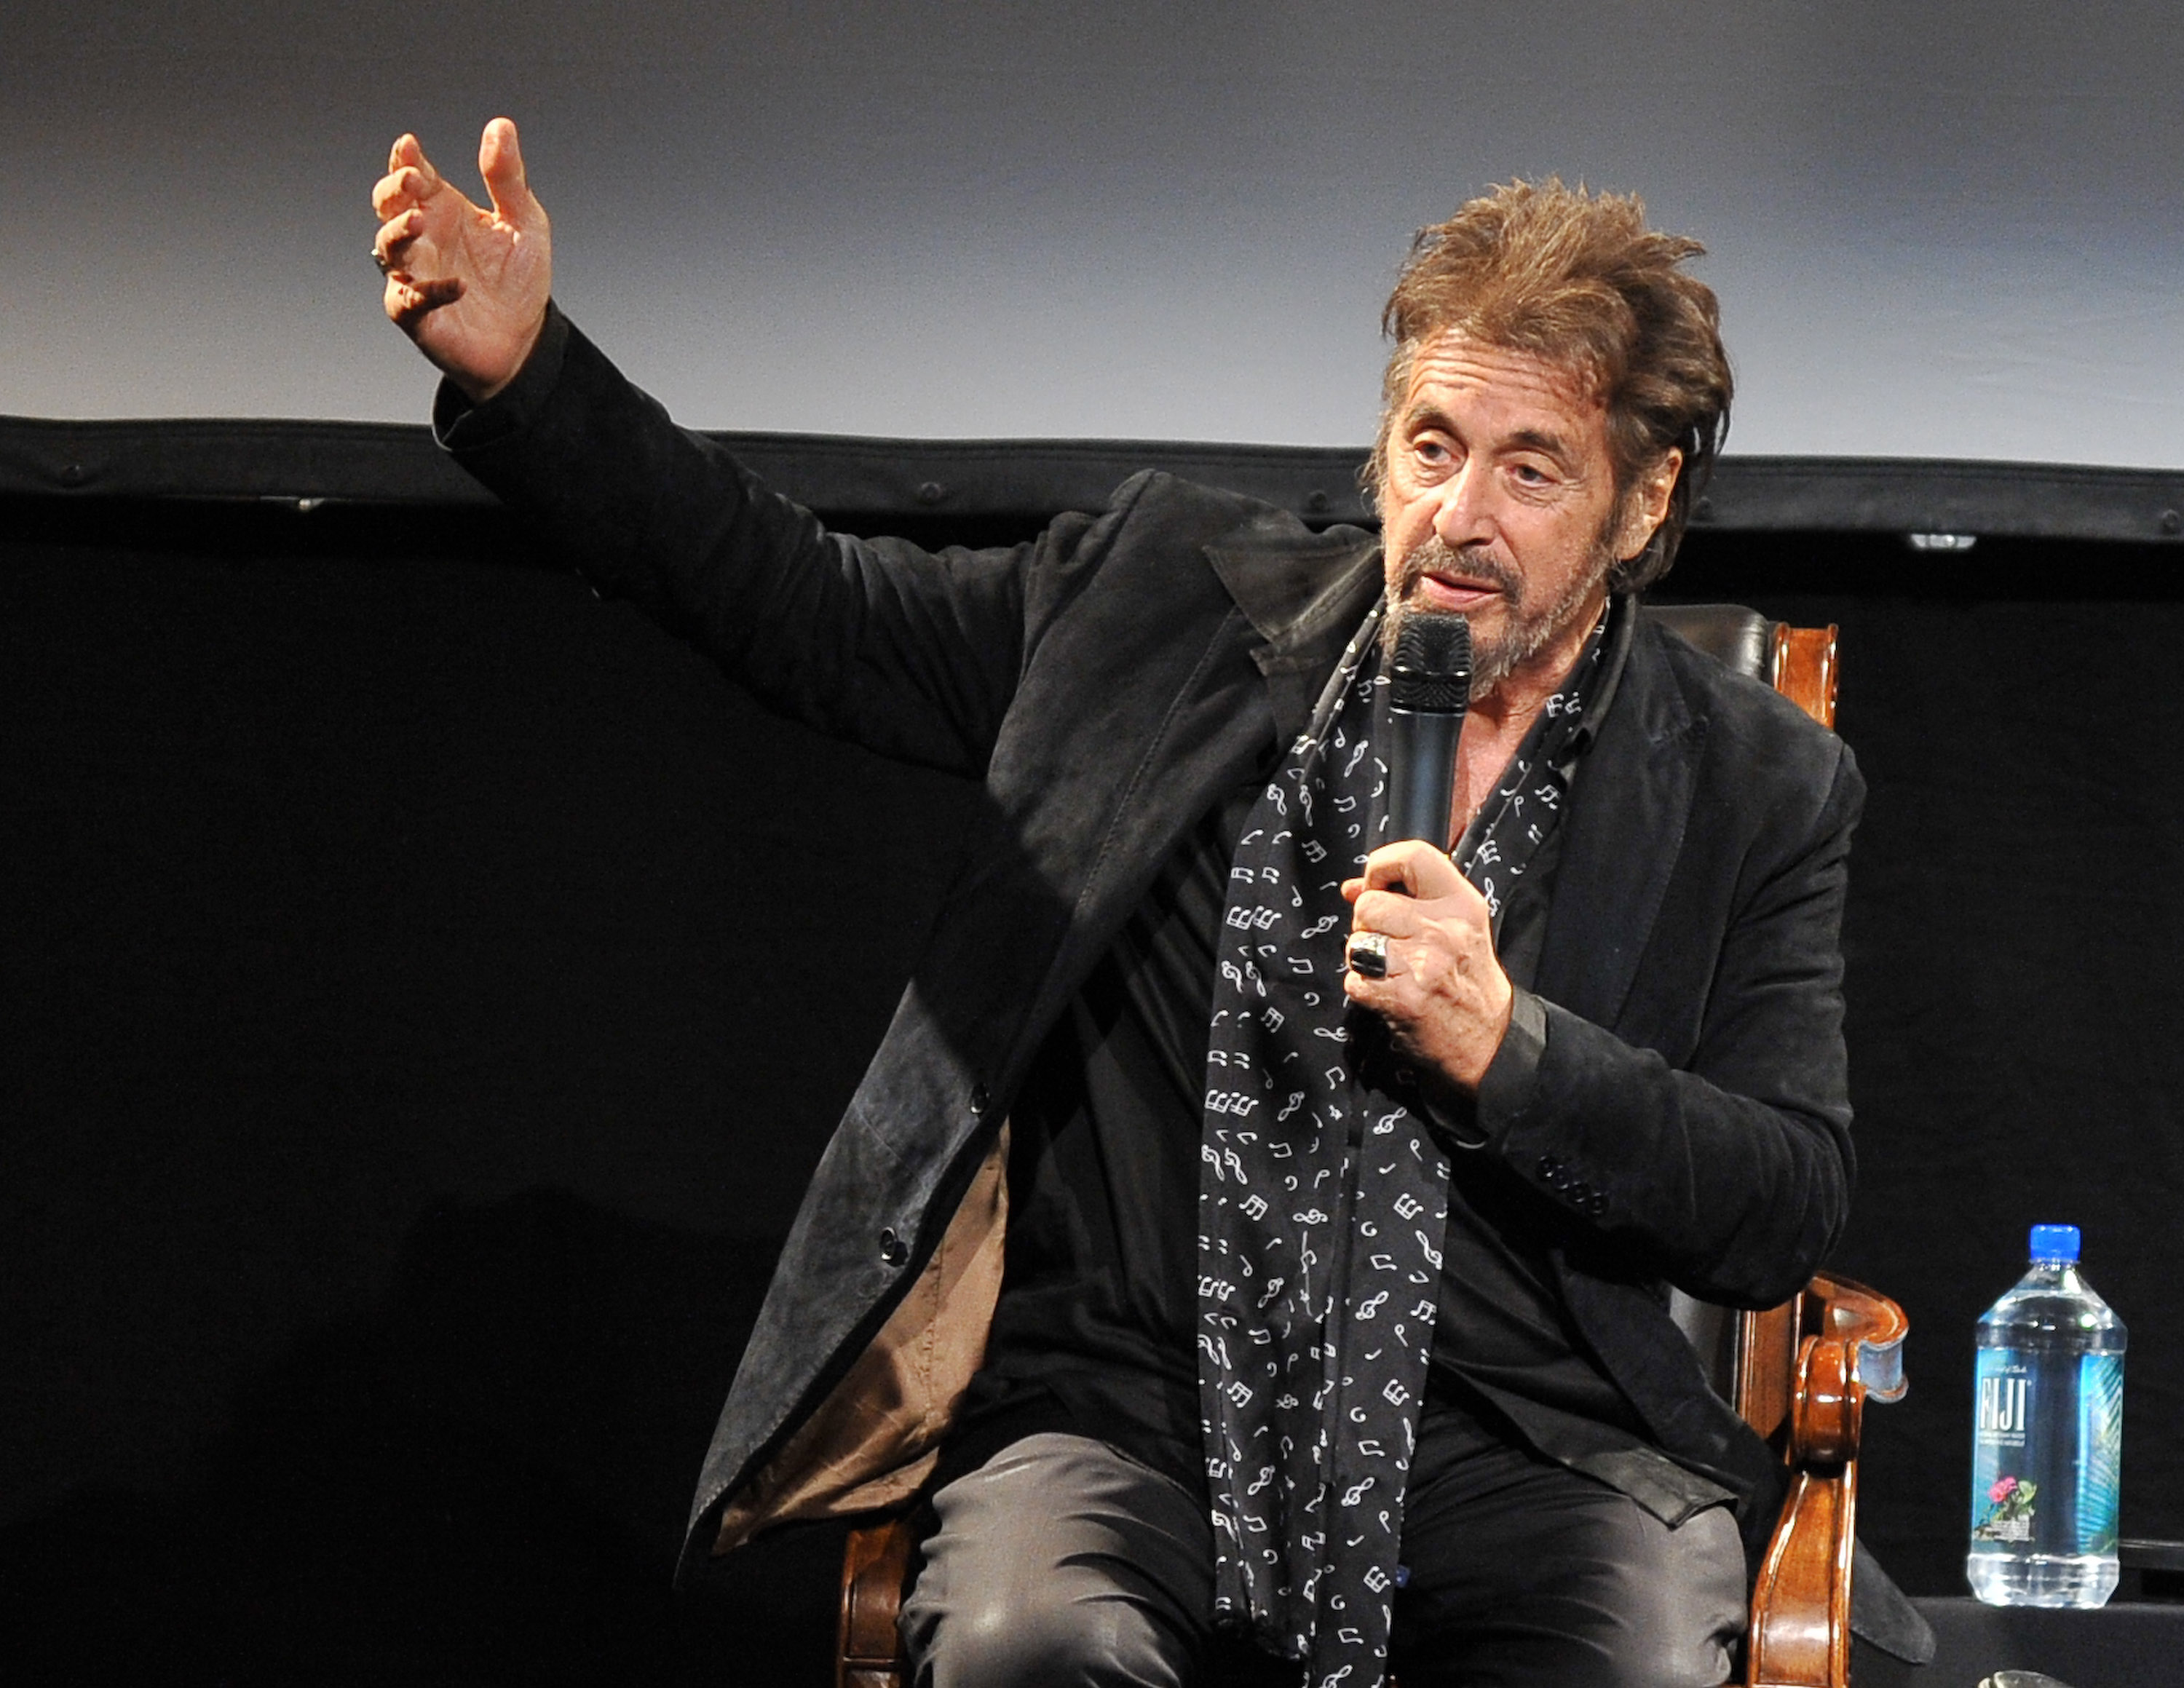 Al Pacino in Hamilton, Canada on November 22, 2010 | Source: Getty Images